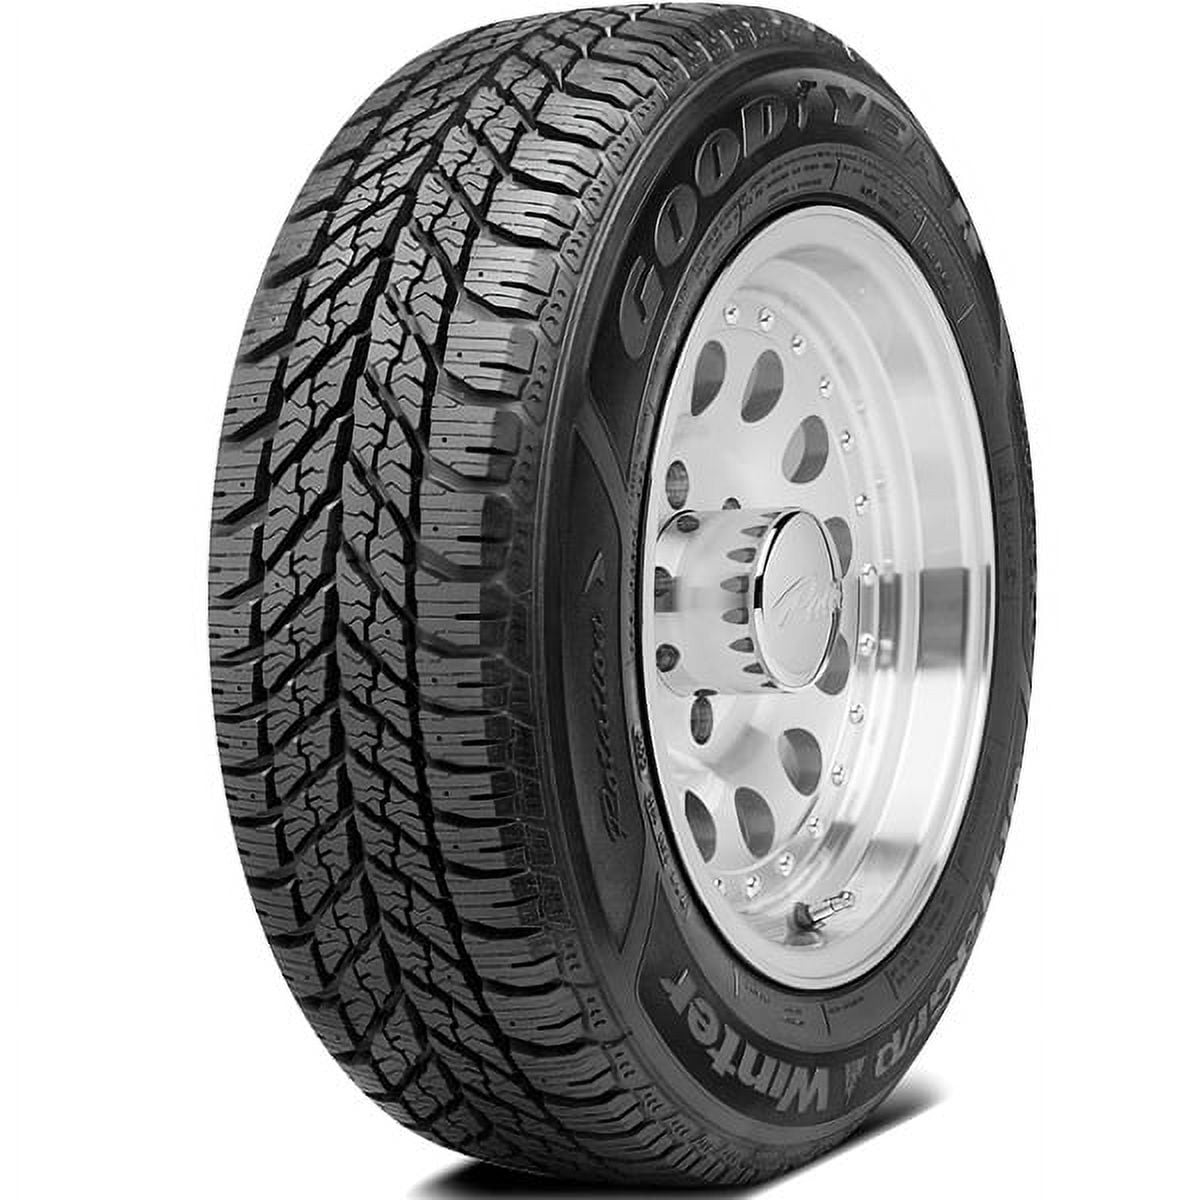 Goodyear Ultra T Winter 225/60R17 Tire 99 Grip